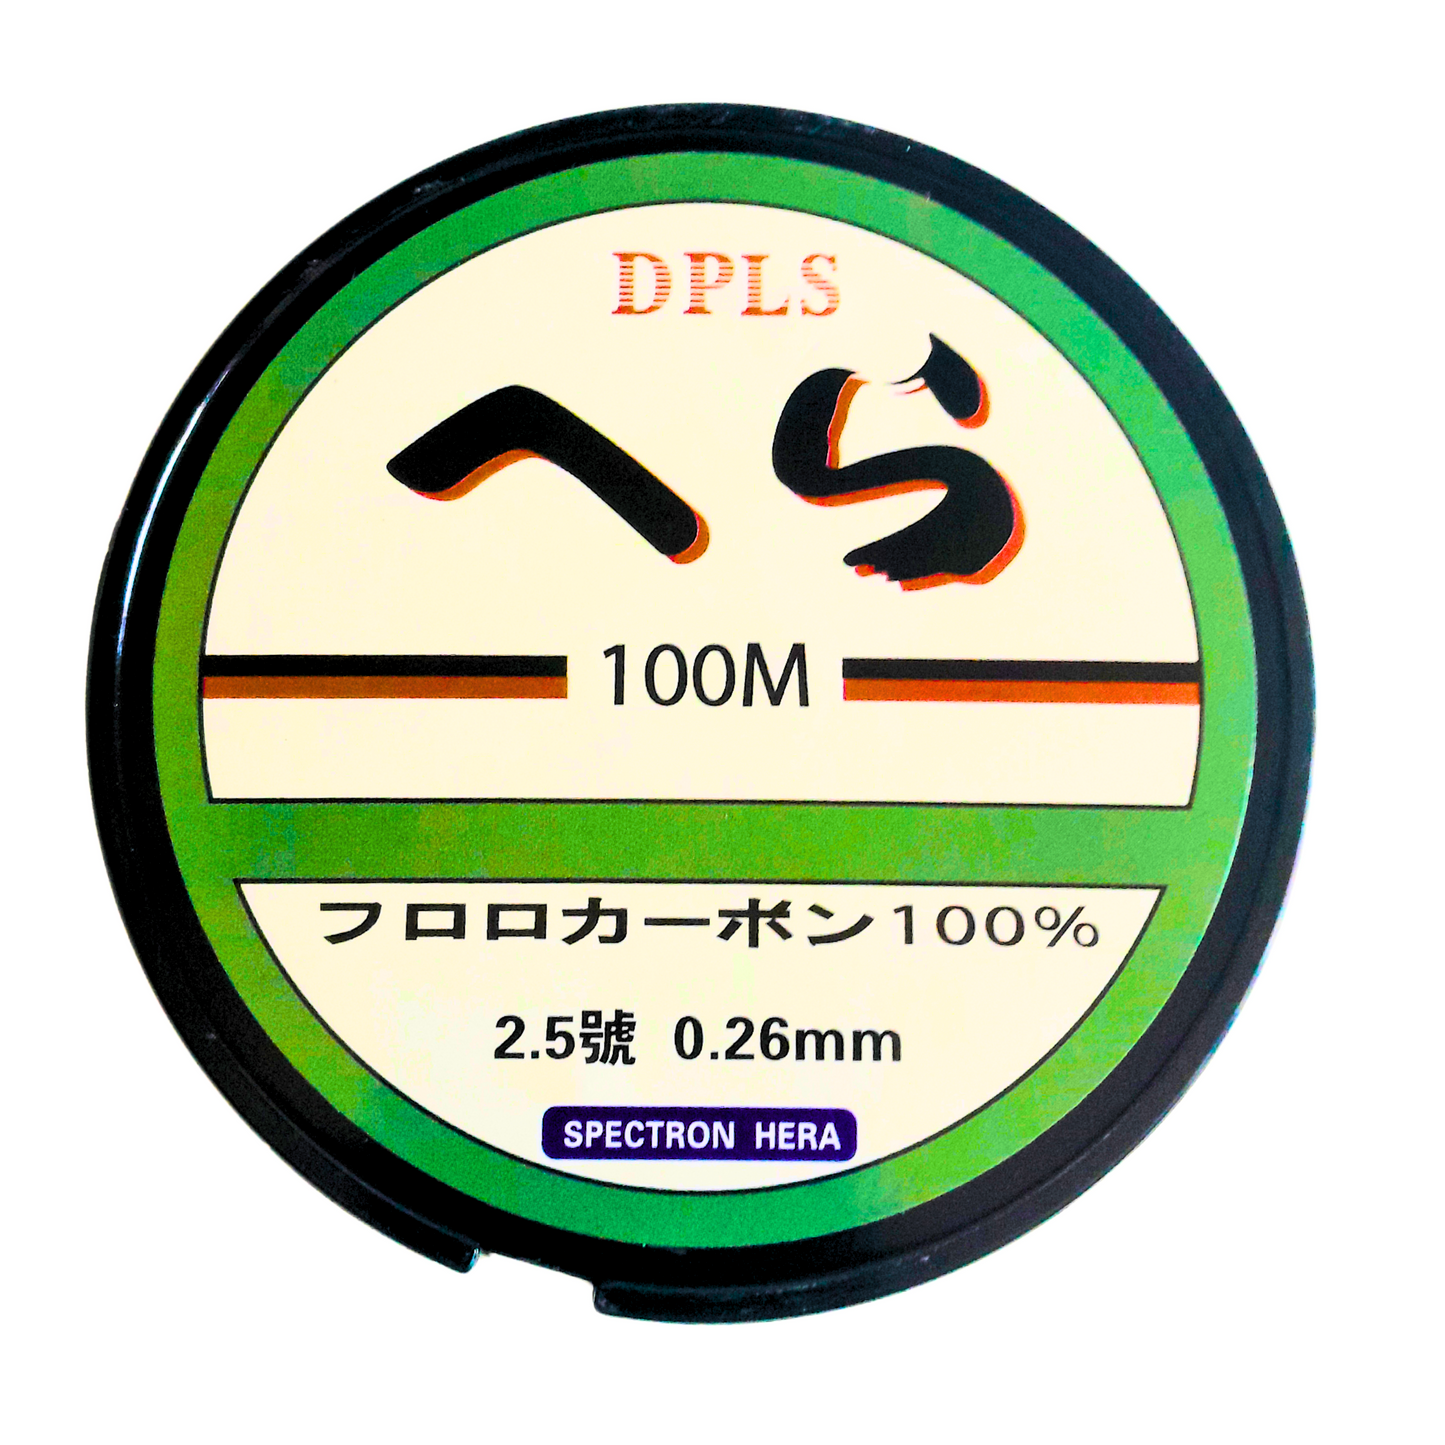 Prunanm Monofilament Fishing Line - 100m | 110yd - 0.260mm | #2.5